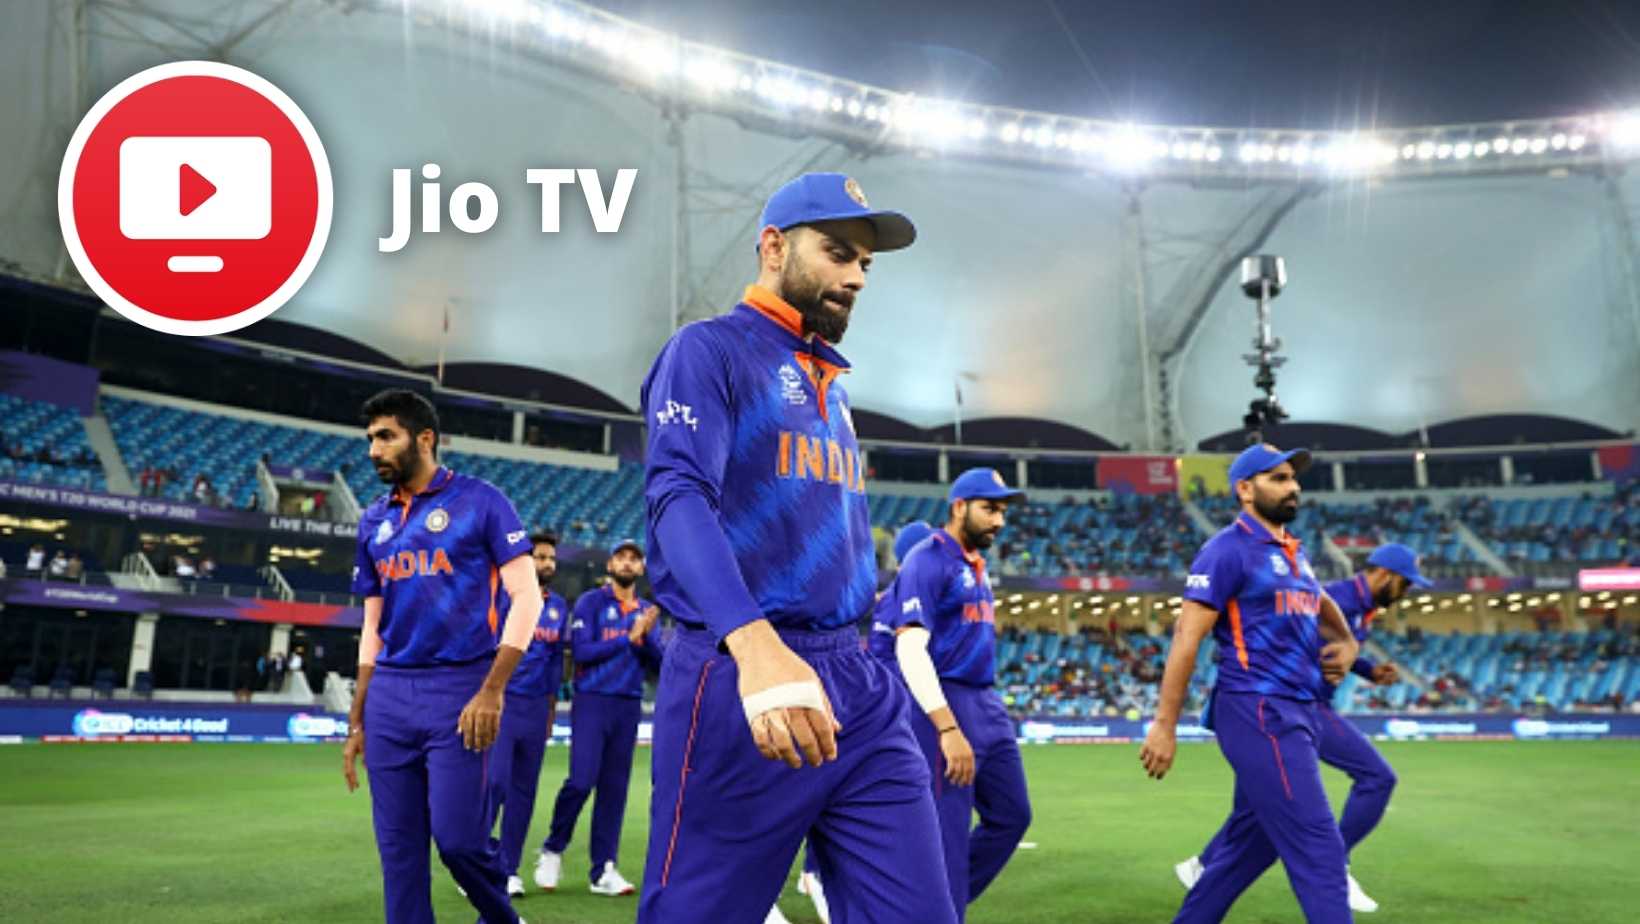 Jio tv app for live IPL watching